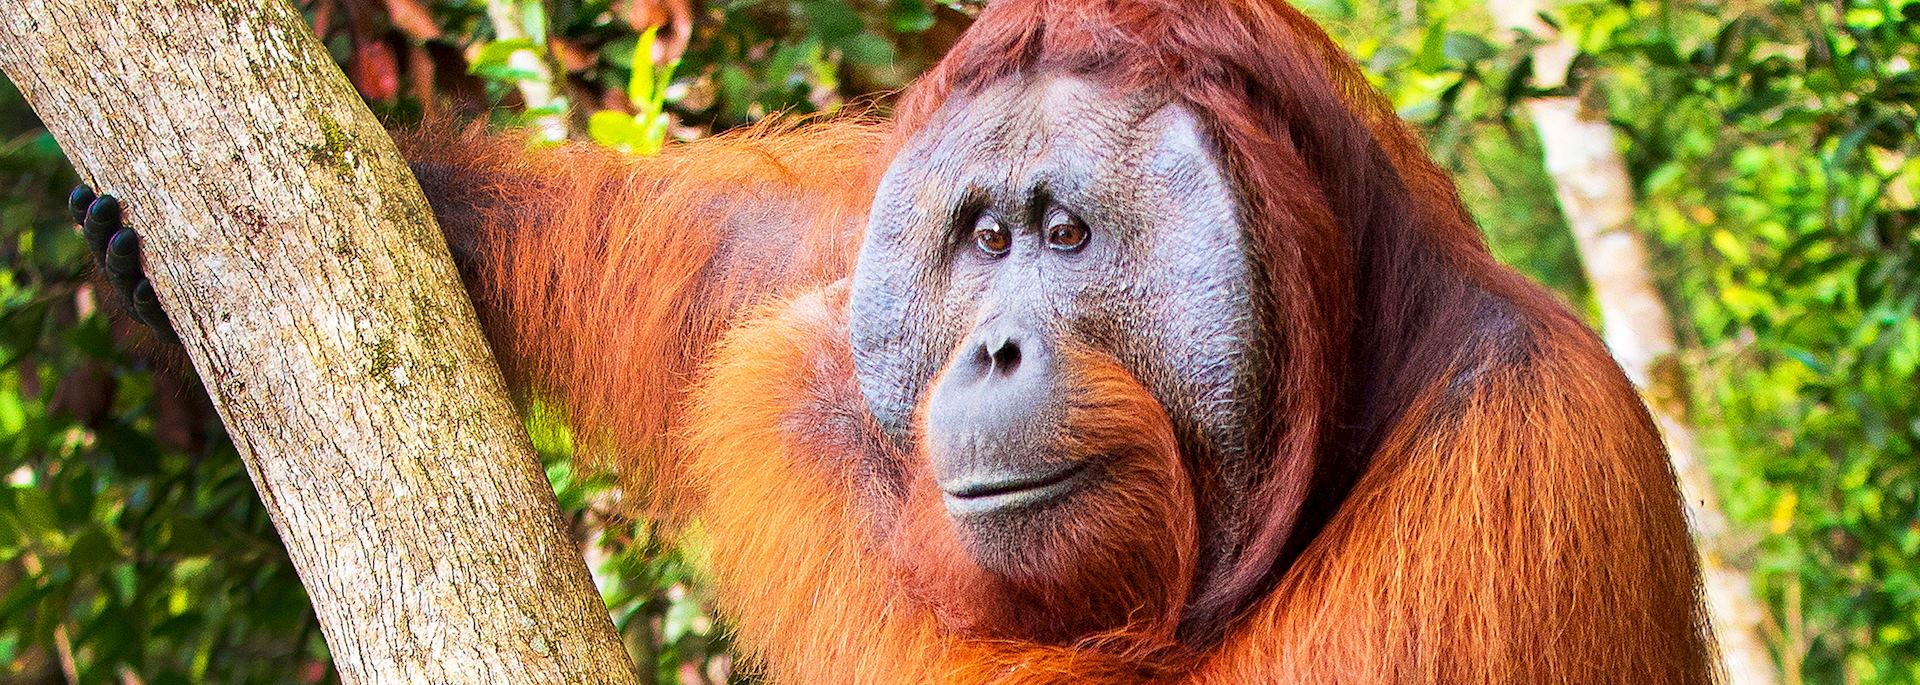 Orangutan in Kalimantan